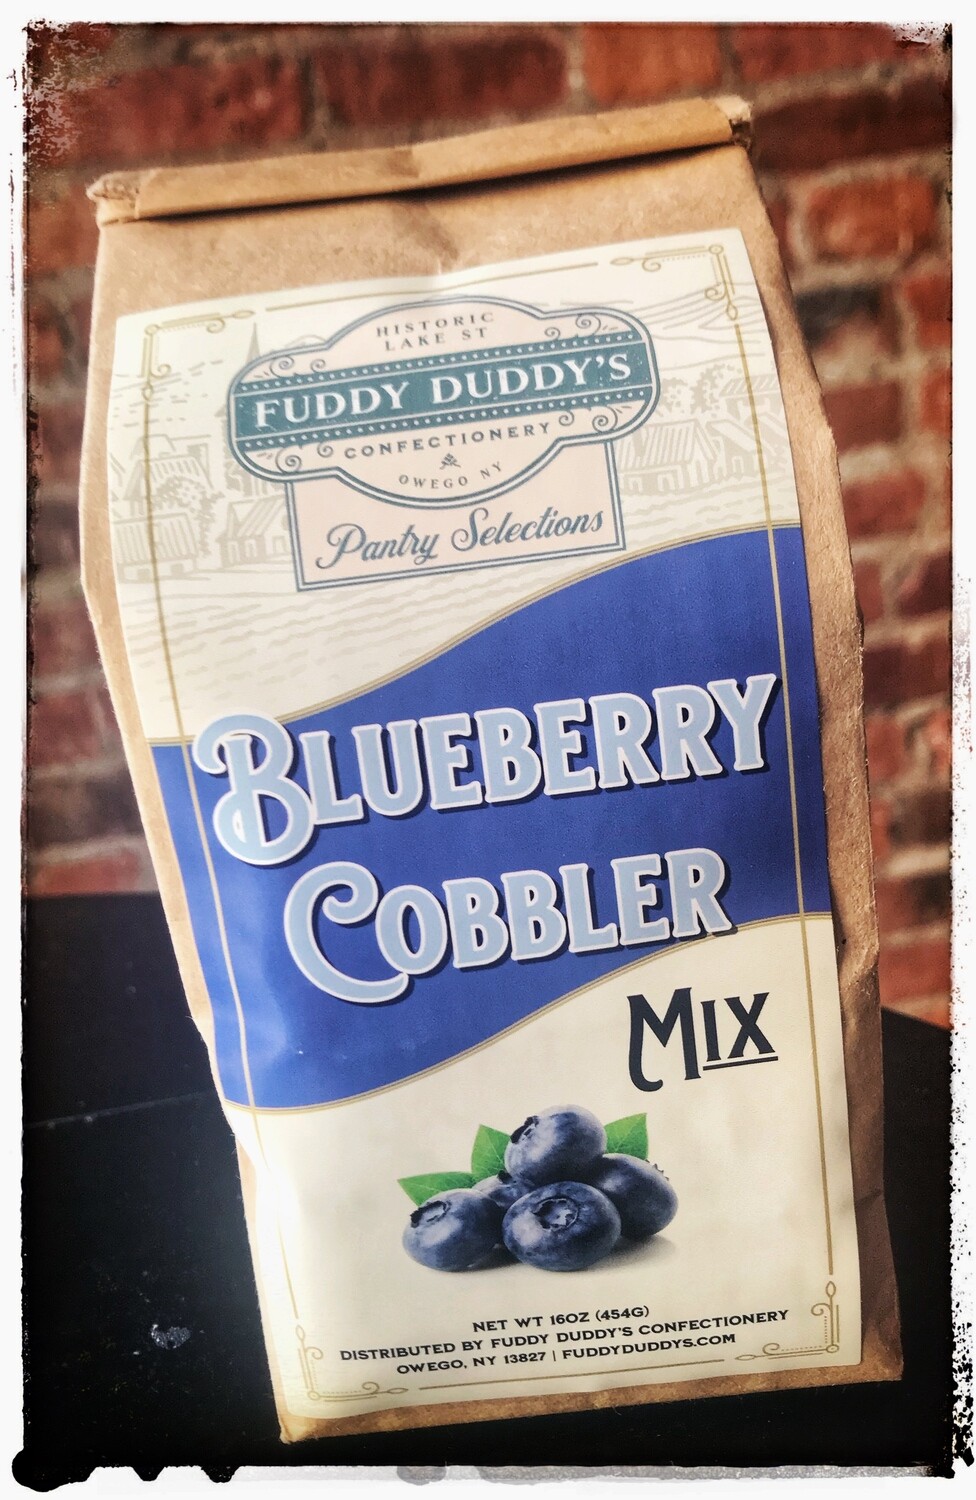 Fuddy Duddy's Blueberry Cobbler Mix